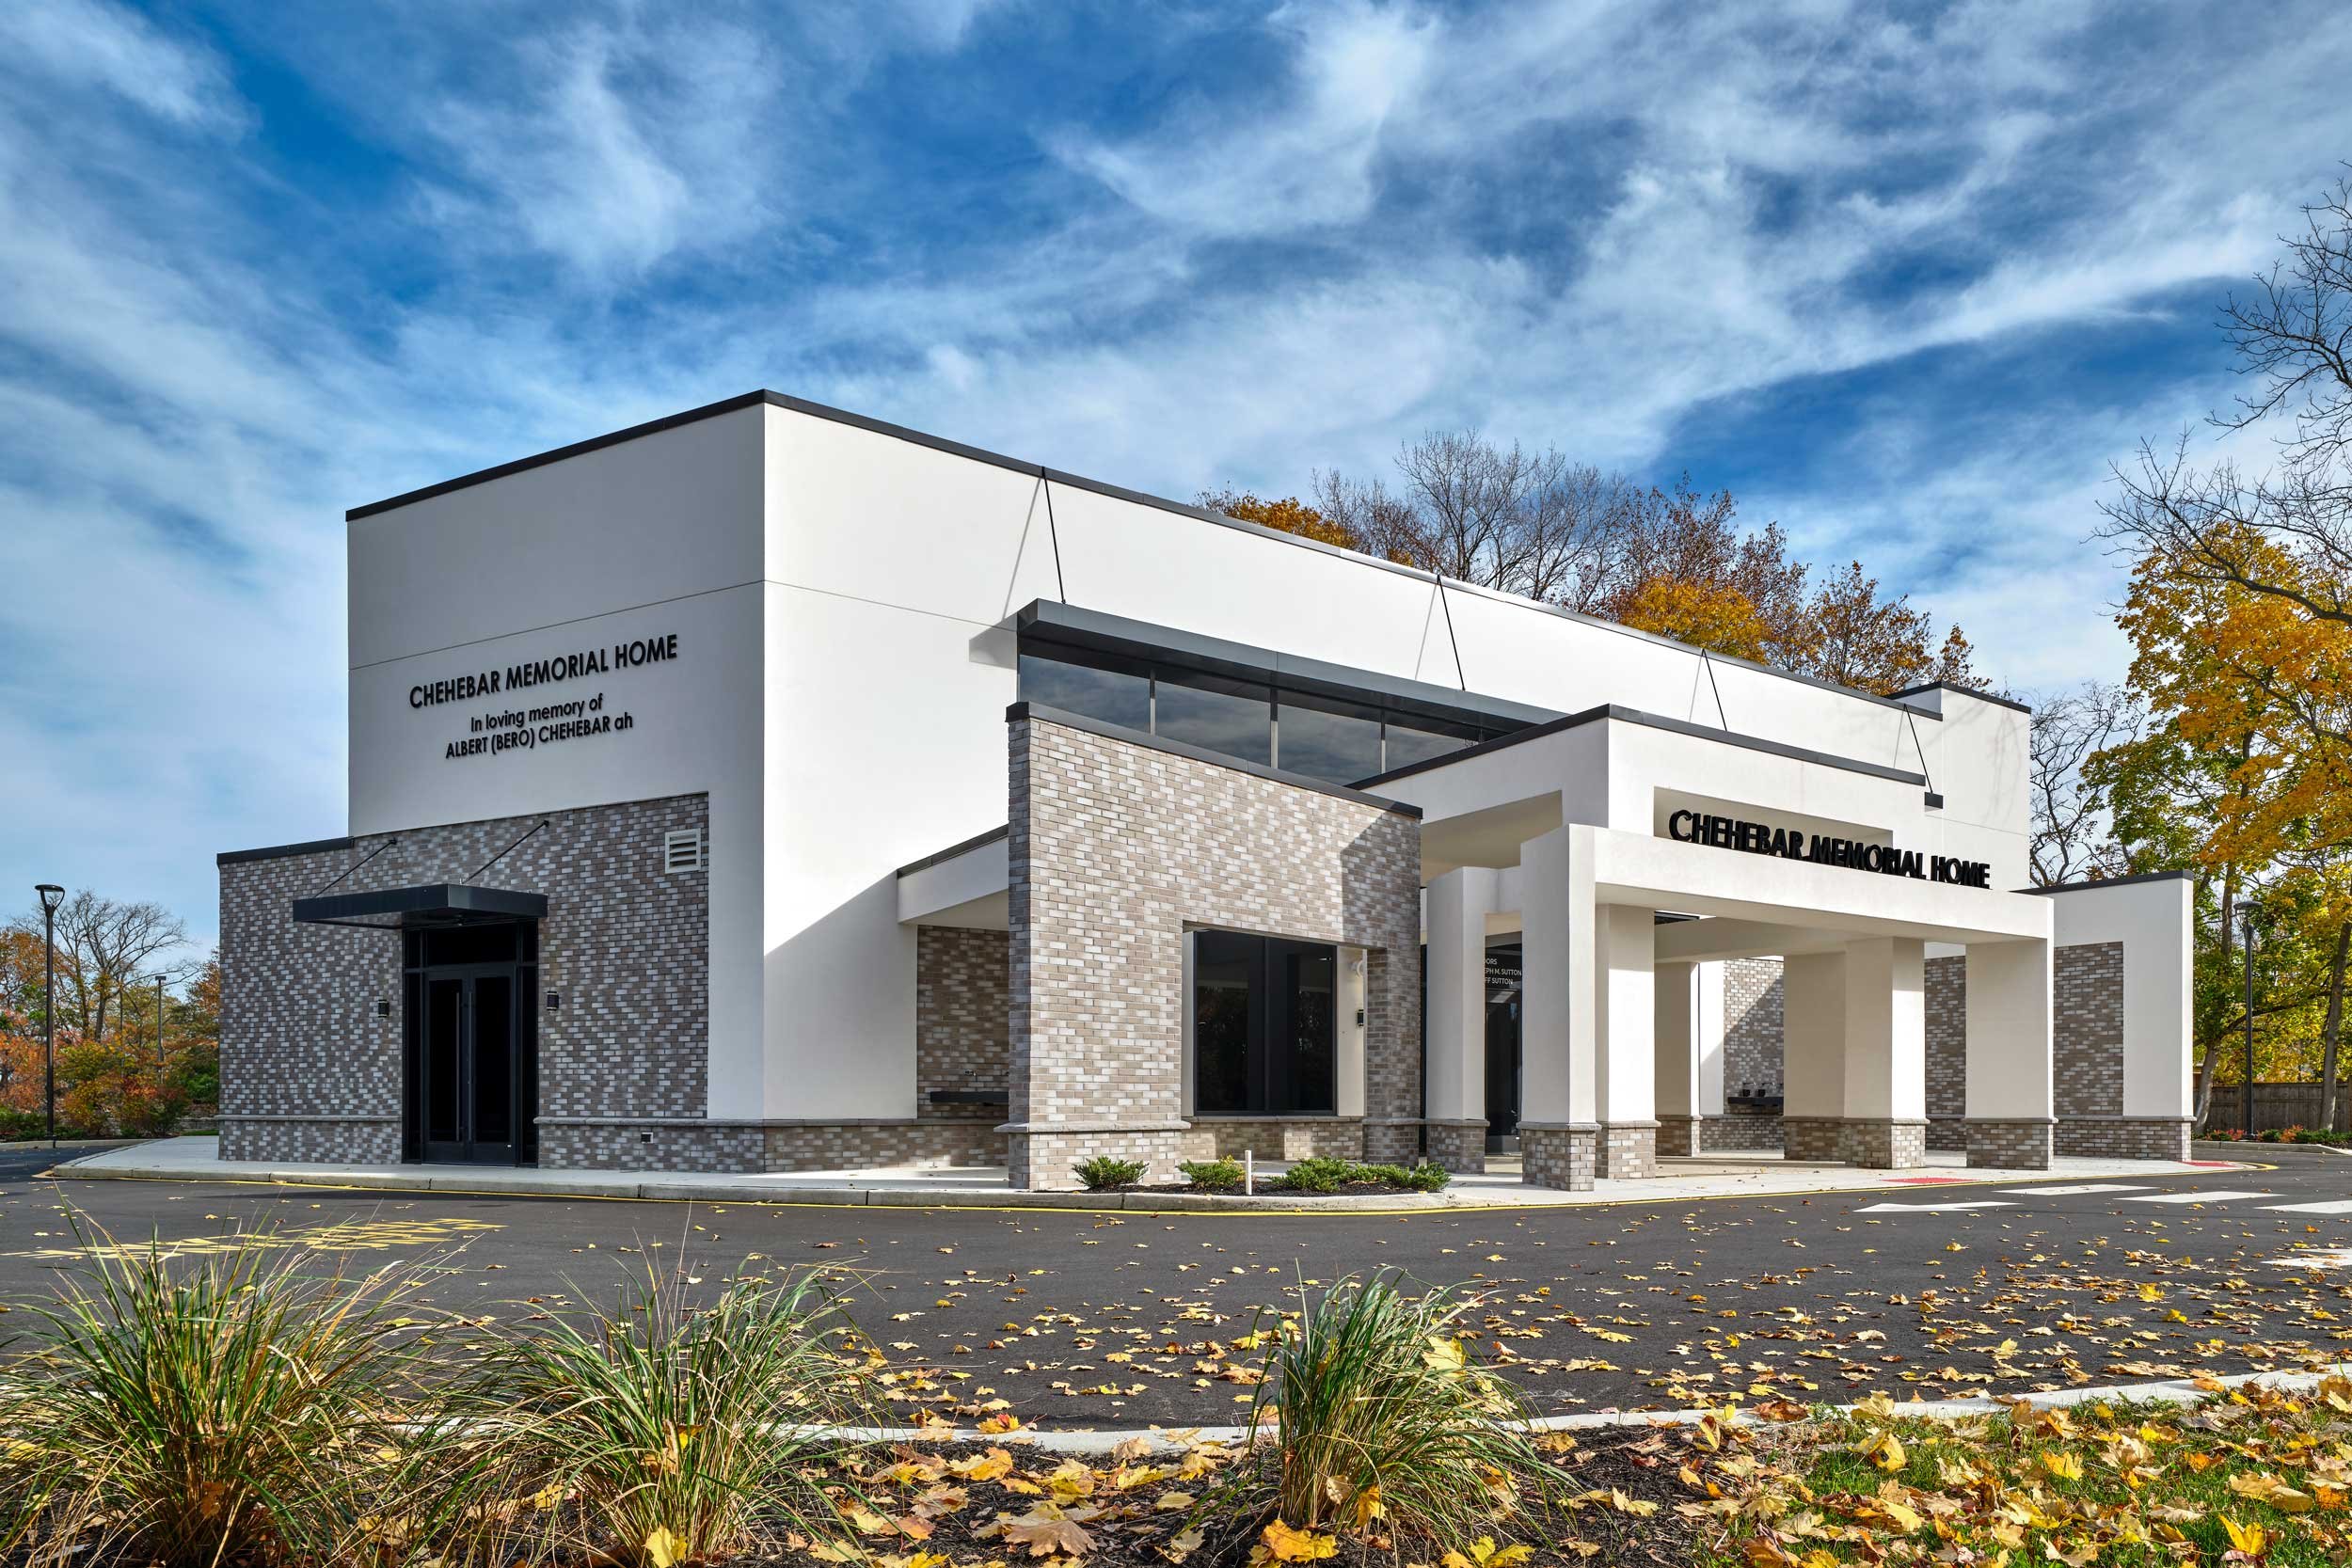  Chehebar Memorial Home Massa Multimedia Architects Deal, NJ 